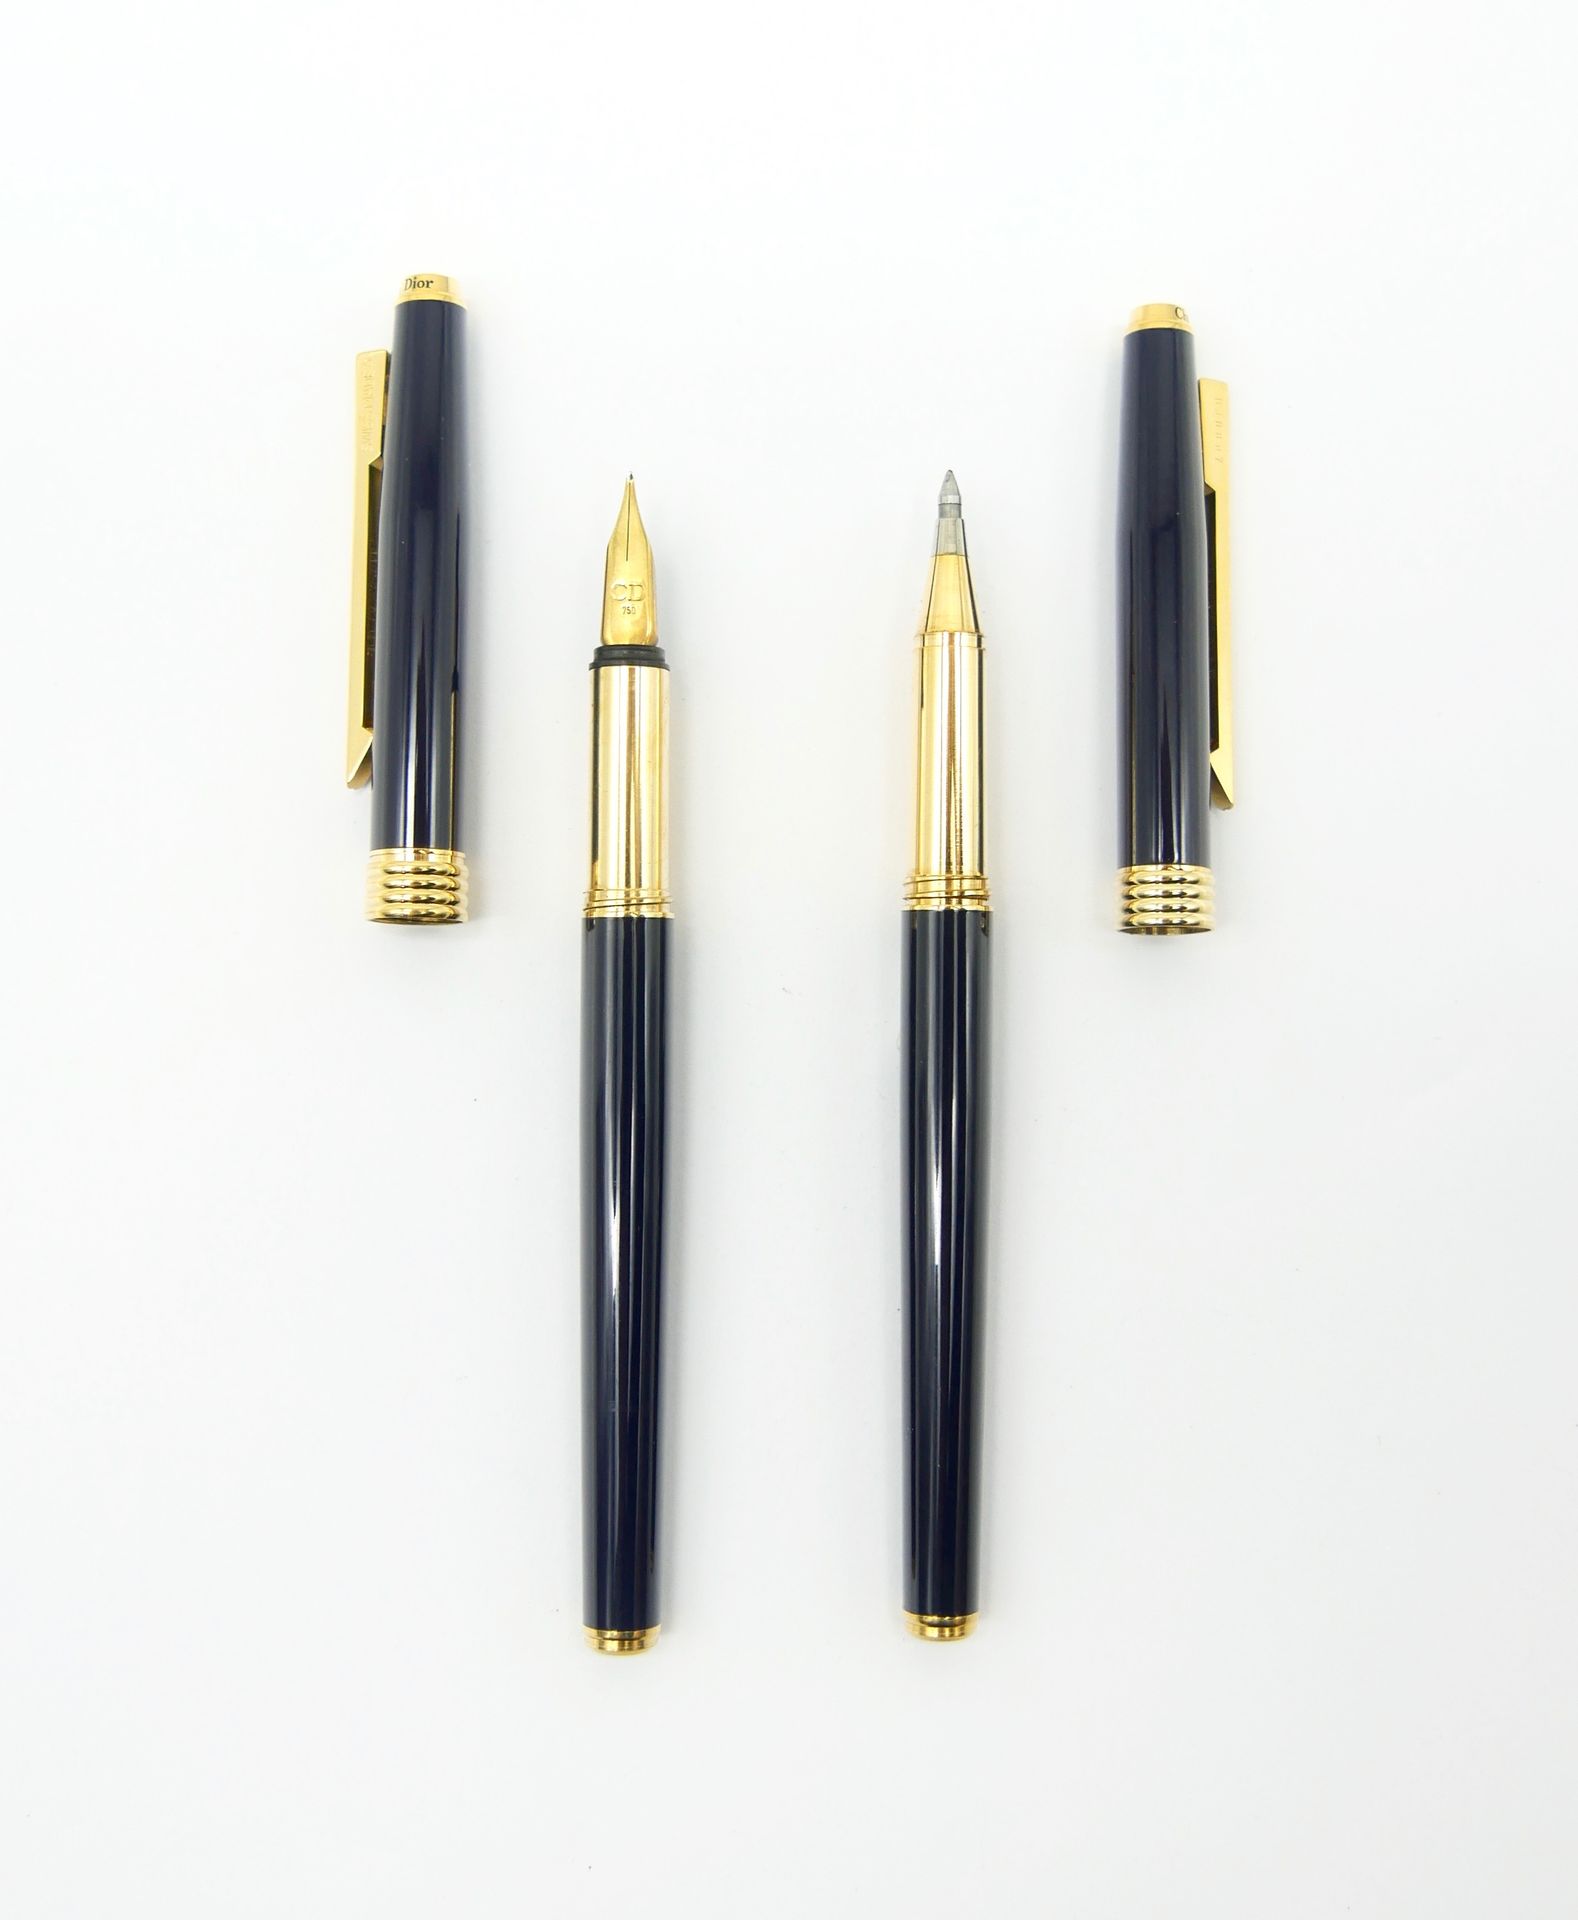 Null 克里斯蒂安-迪奥

钢笔和圆珠笔套装，镀金金属和午夜蓝漆面，750/1000金笔尖 

刻有Christian Dior的字样

编号为CAD425和&hellip;